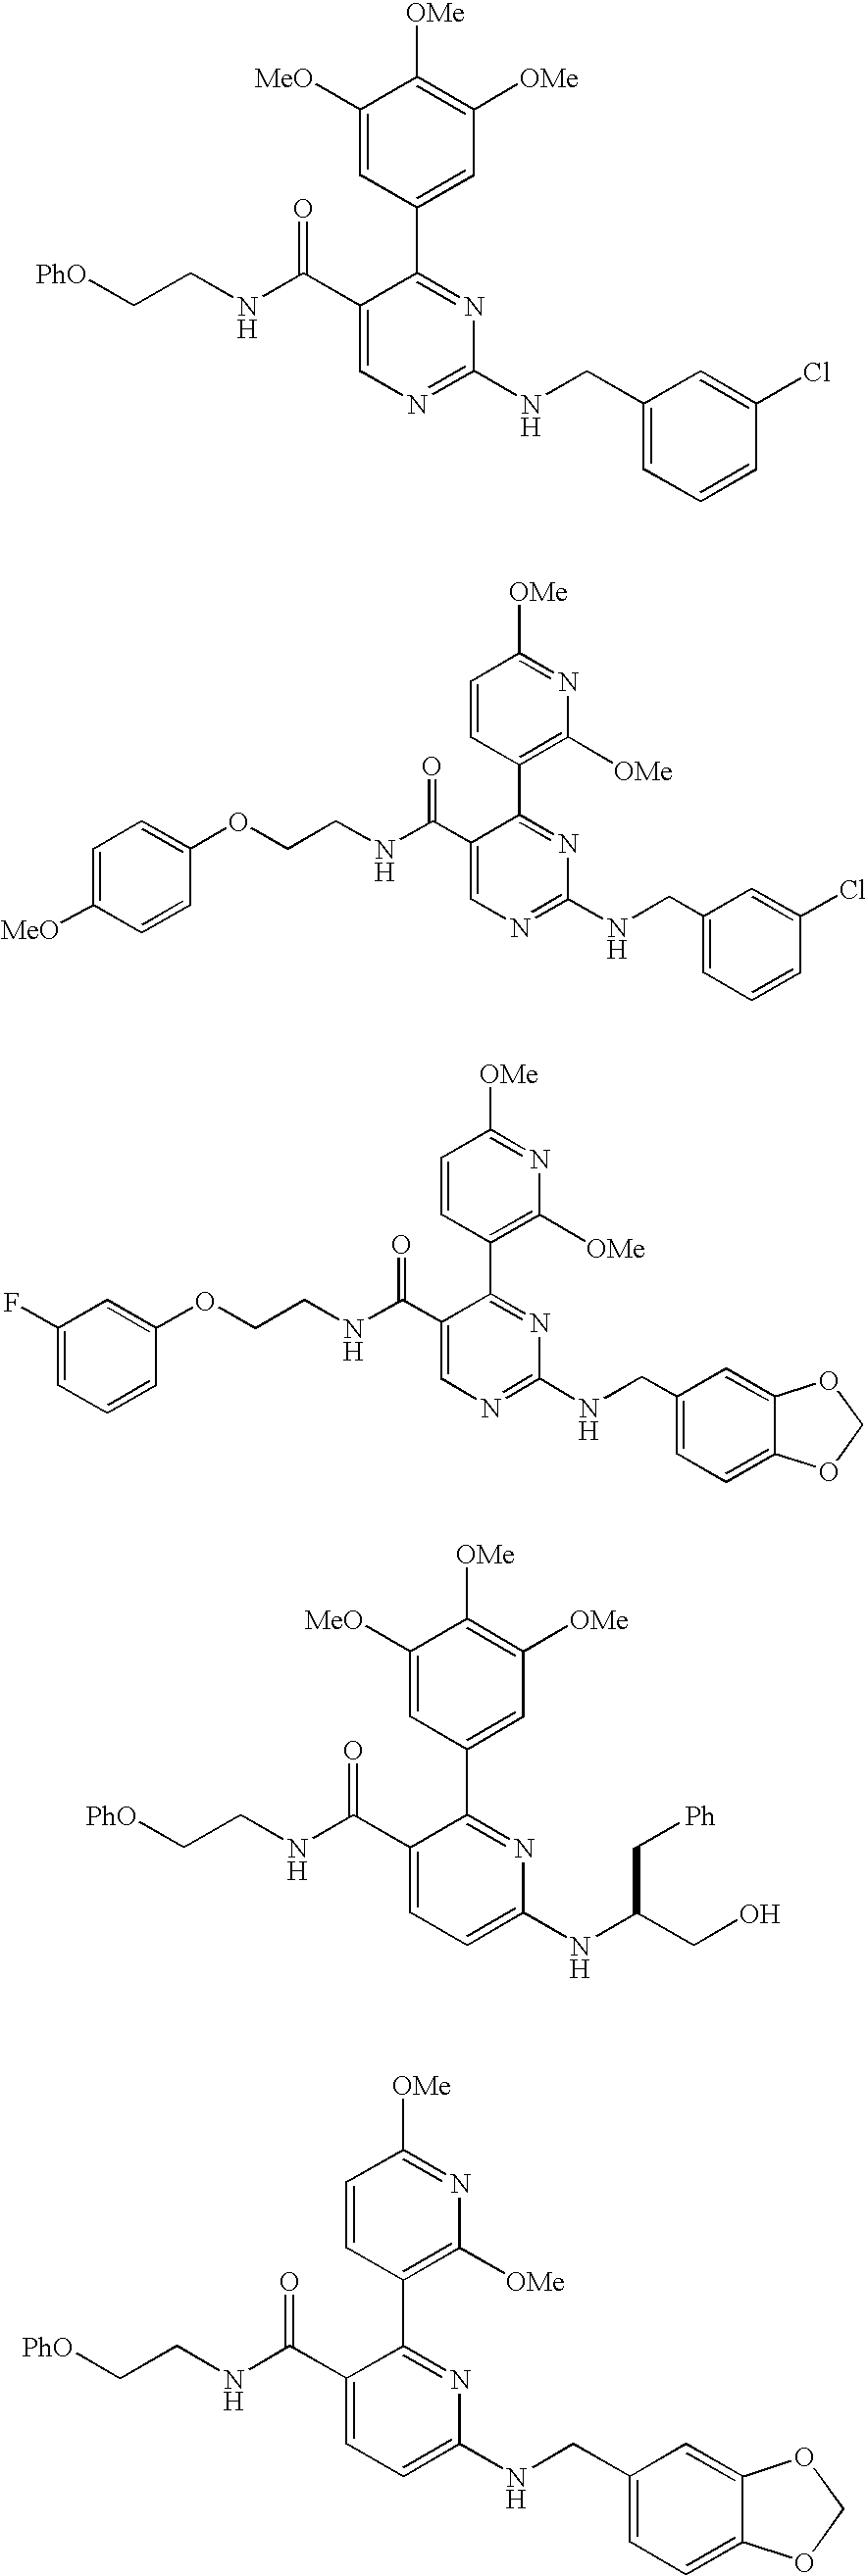 Trisubstituted heteroaromatic compounds as calcium sensing receptor modulators